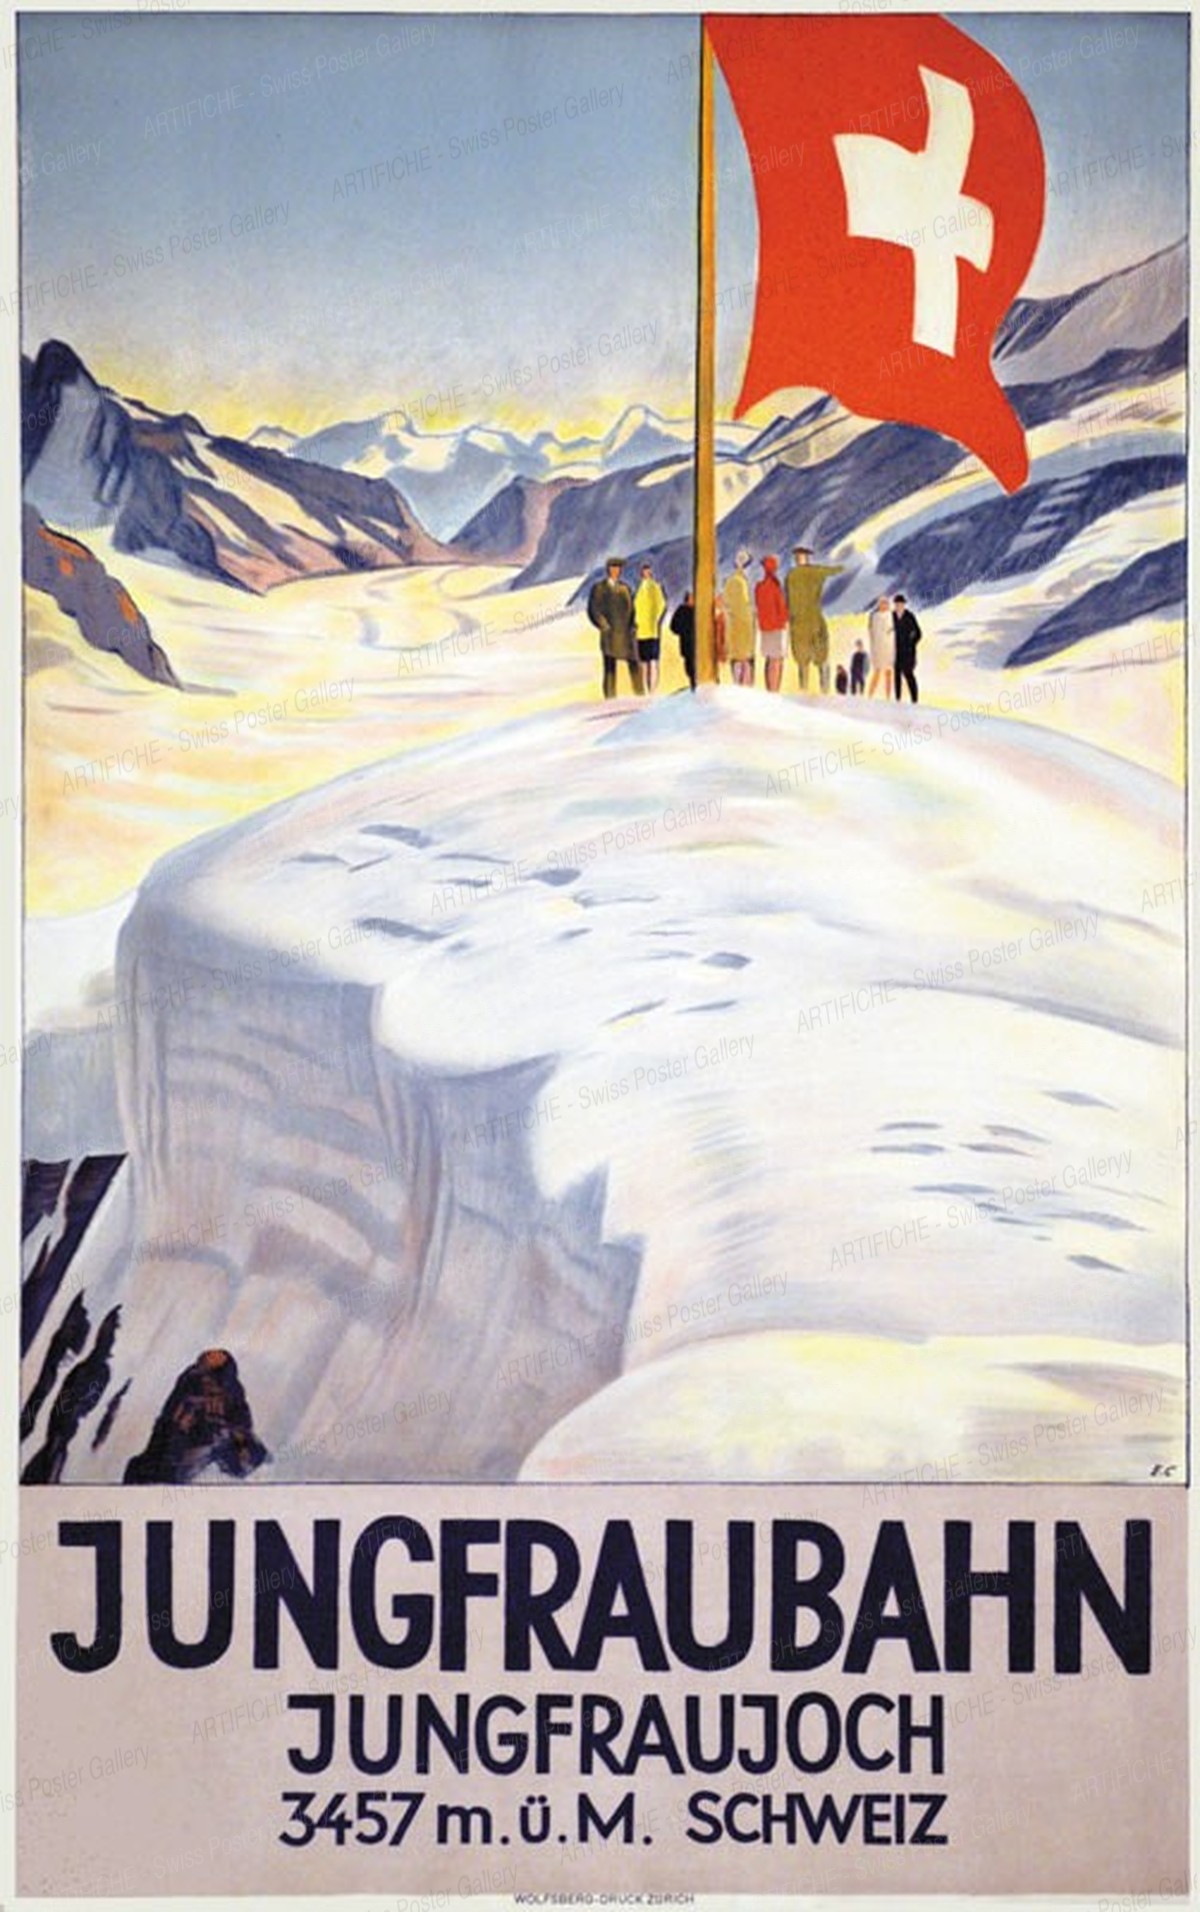 Jungfrau Railroad 11333 feet asl -Switzerland, Emil Cardinaux